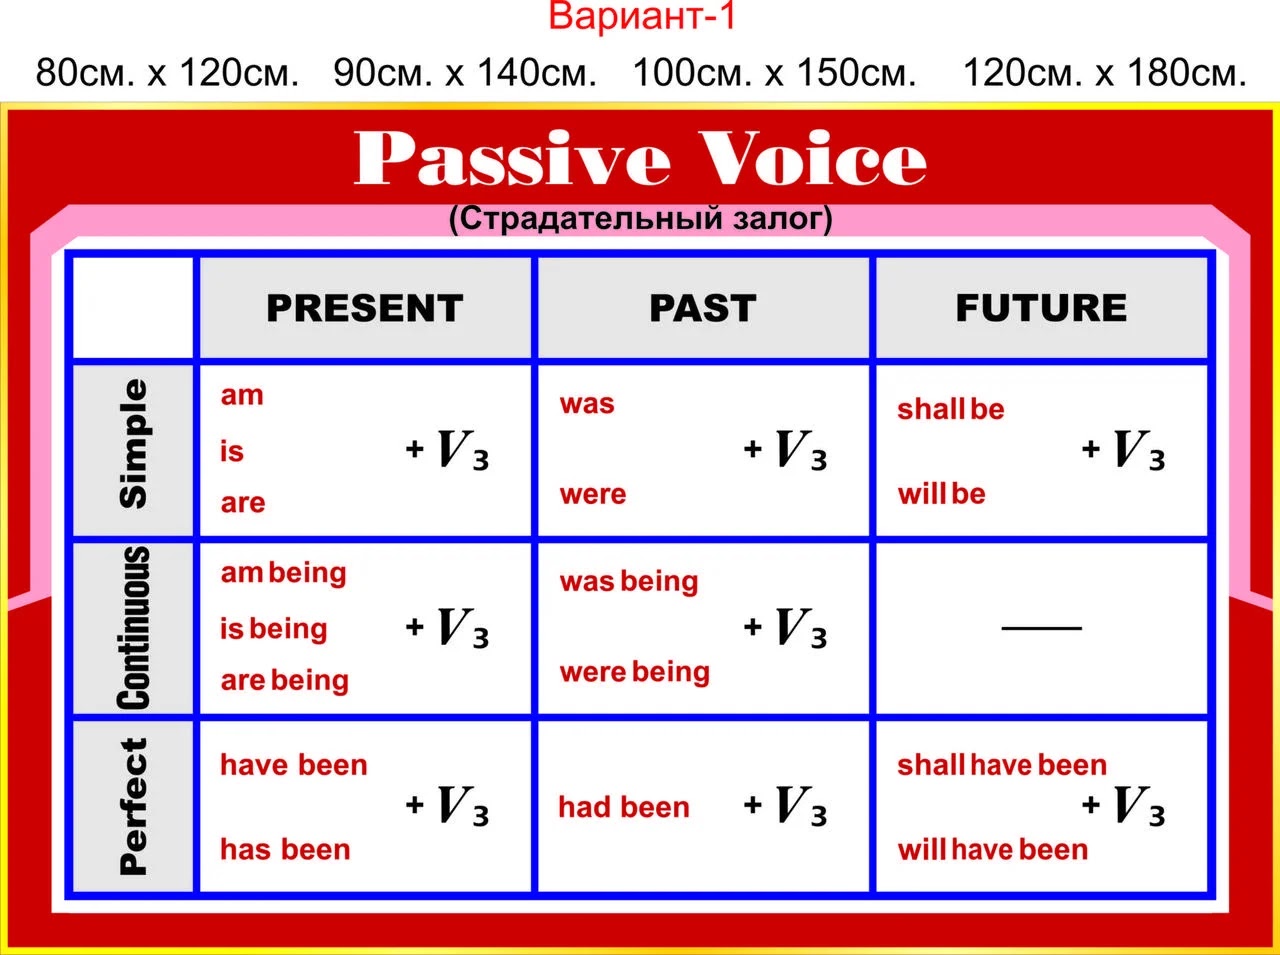 Last в пассивном залоге. Simple Passive таблица. Passive Voice таблица. Пассивный залог в английском языке таблица. Страдательный залог.